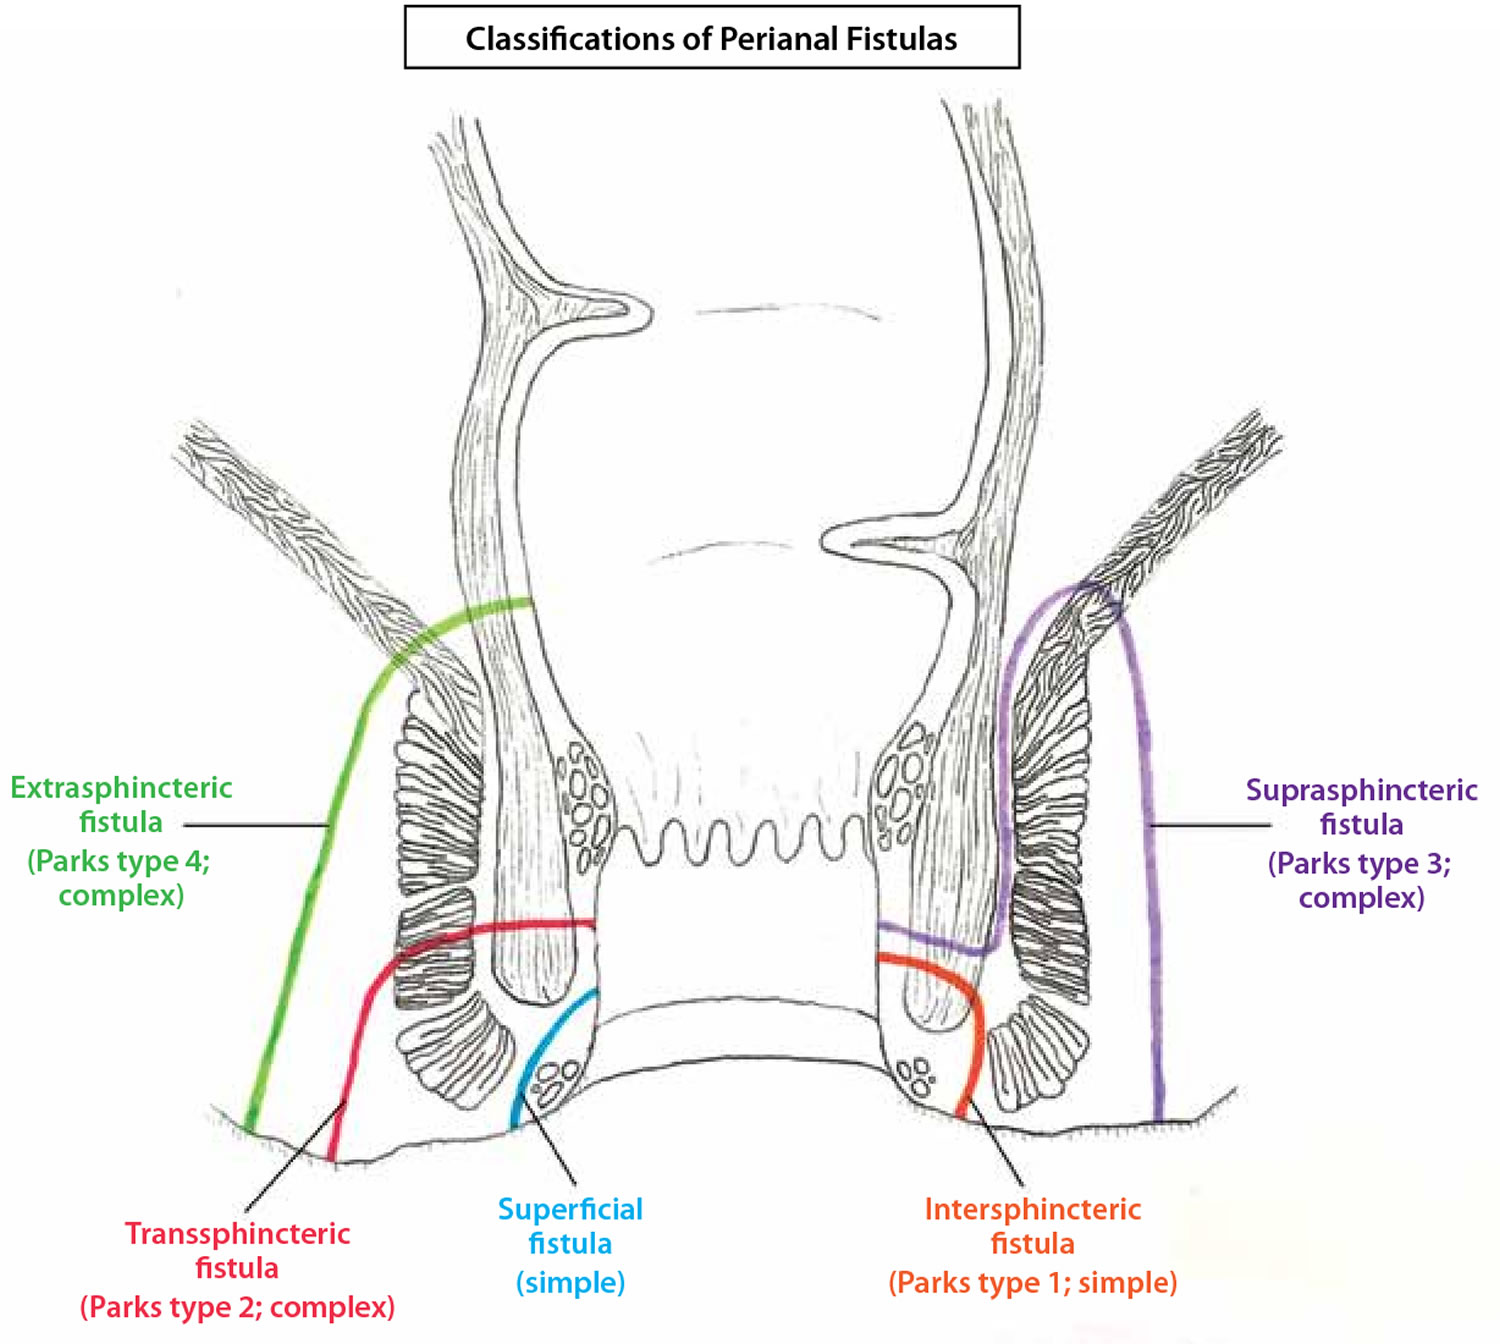 Parks classification of perianal fistula